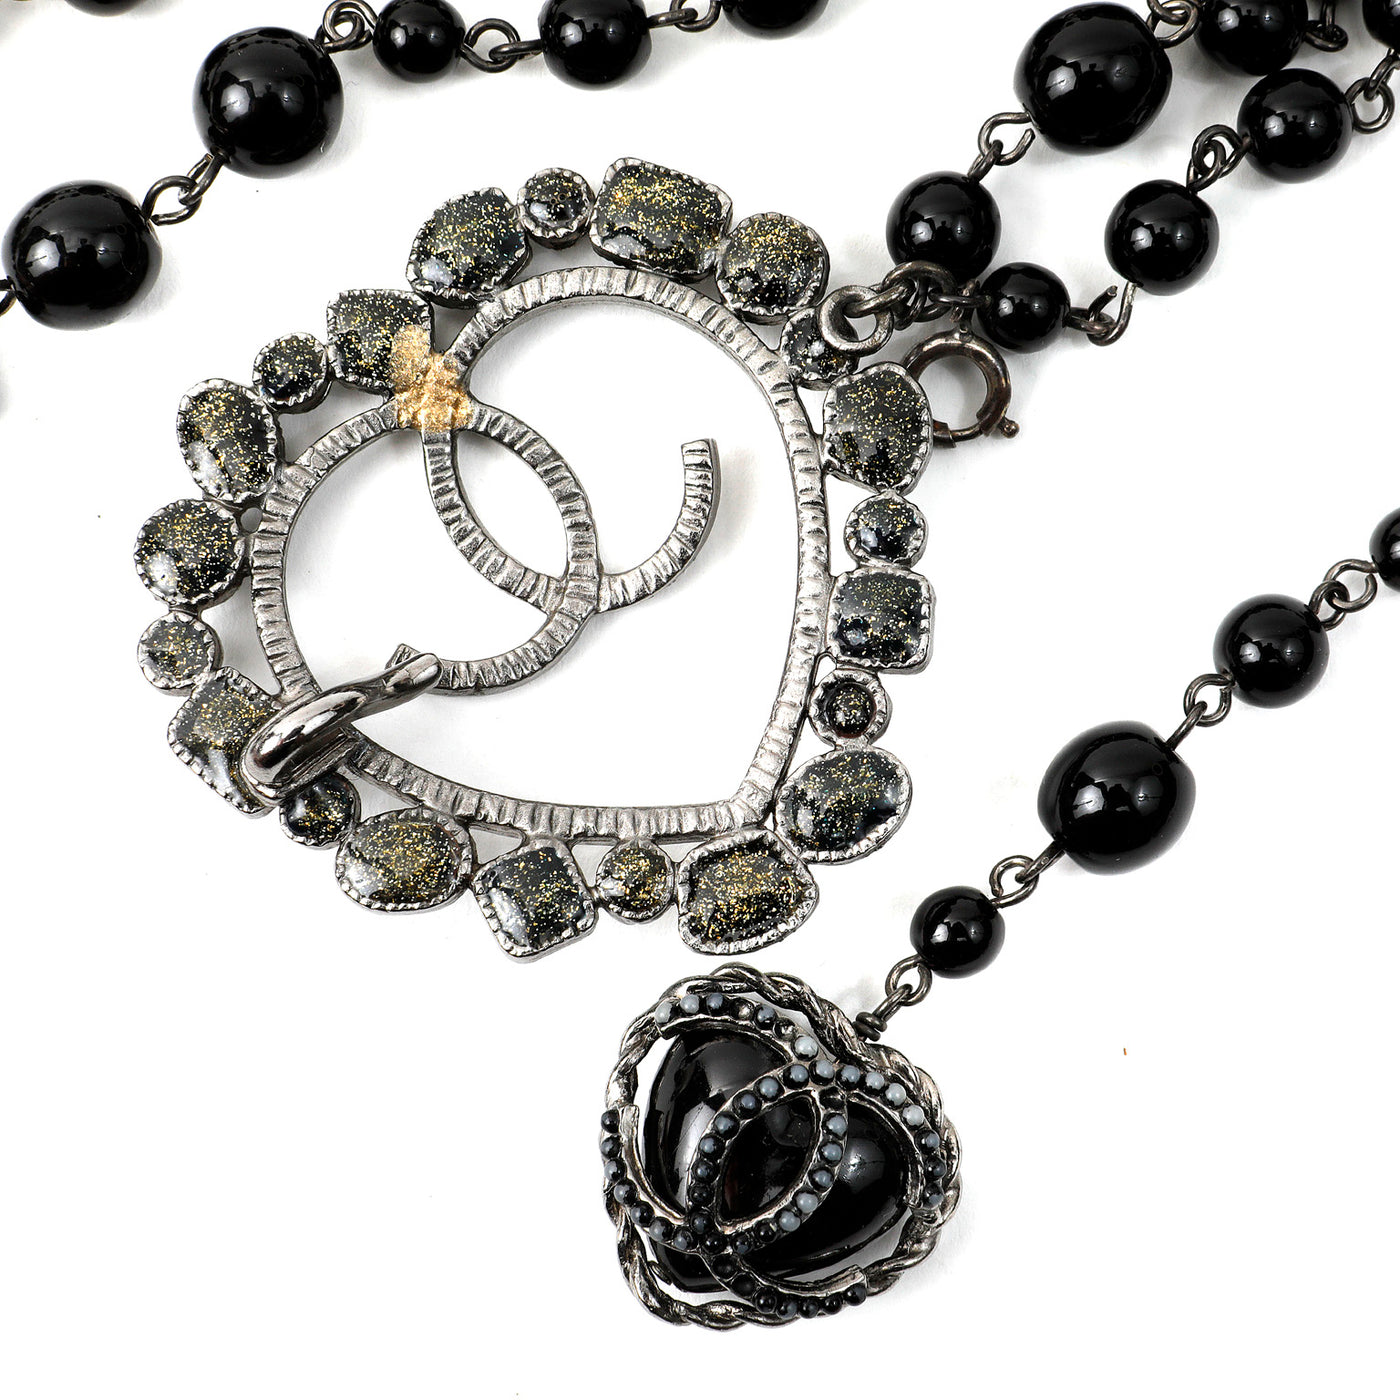 Chanel Black Onyx Heart  Necklace Belt